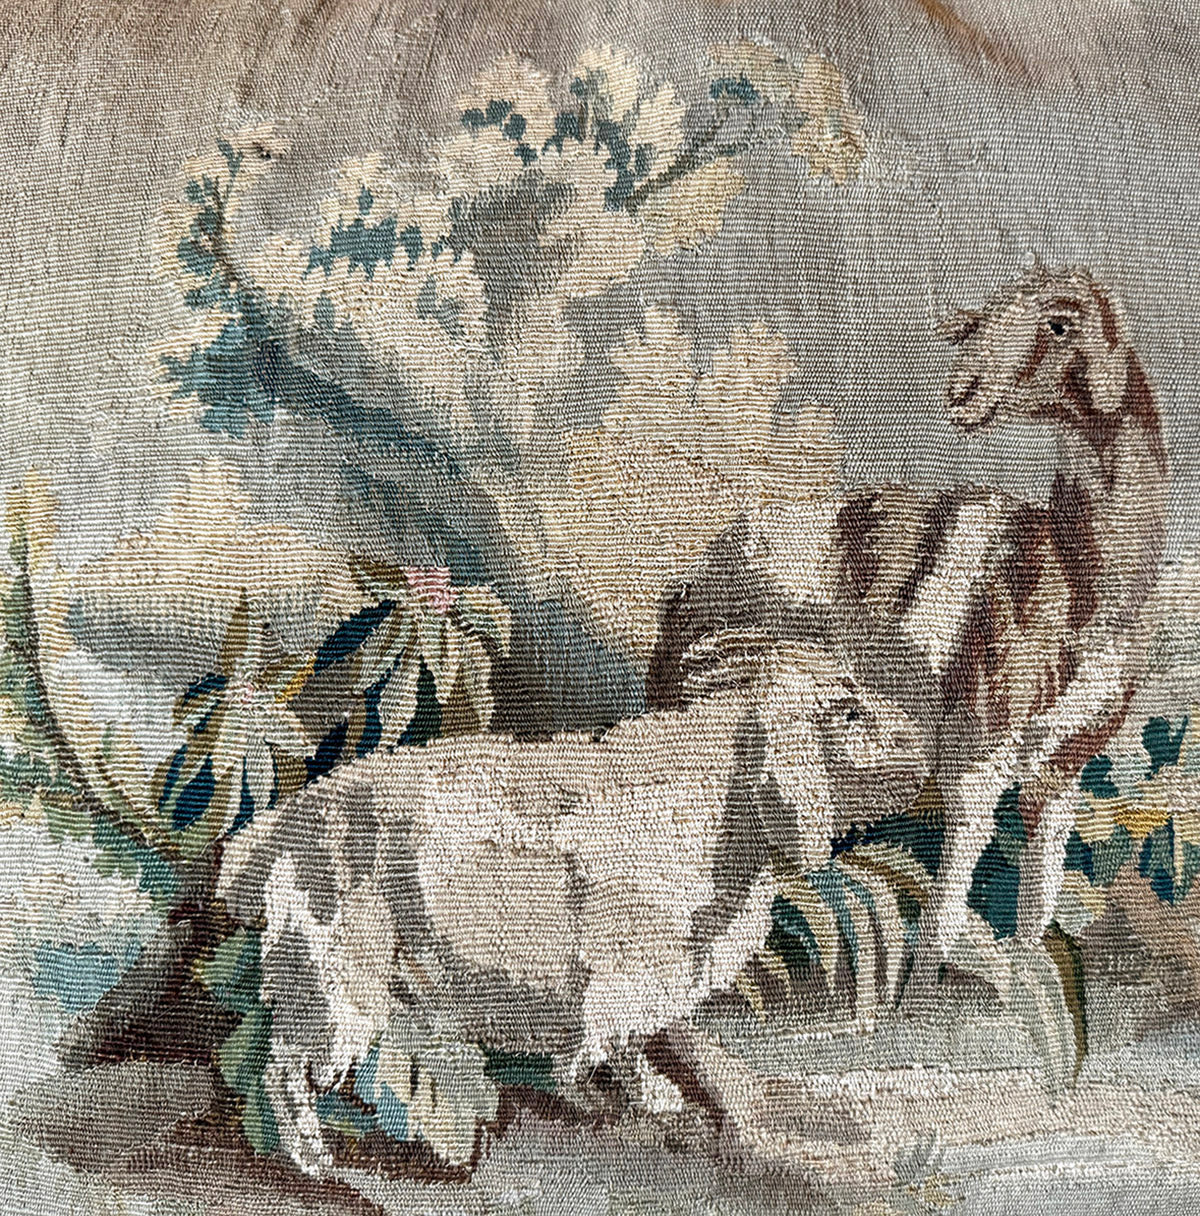 Opulent Large Antique 18th Century French Aubusson Tapestry Pillow #7, Goat Pari, 30" x 27" + Fringe